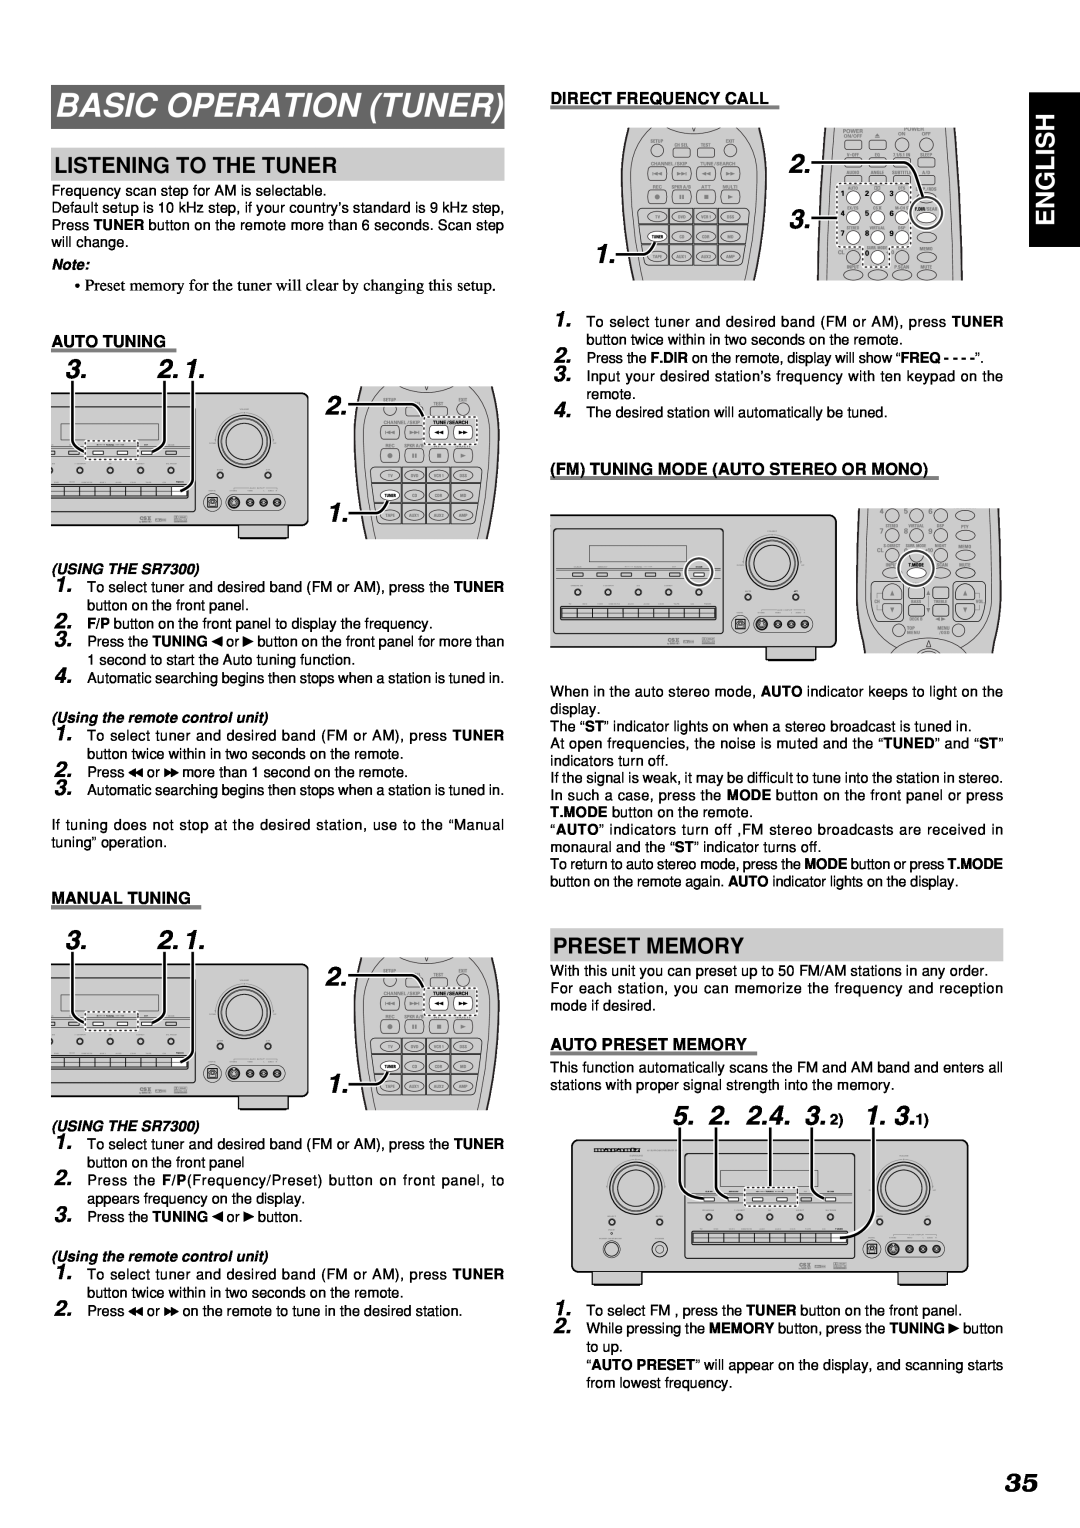 Marantz SR7300 Basic Operation Tuner, 3.2, English, Auto Tuning, Manual Tuning, Direct Frequency Call, Auto Preset Memory 